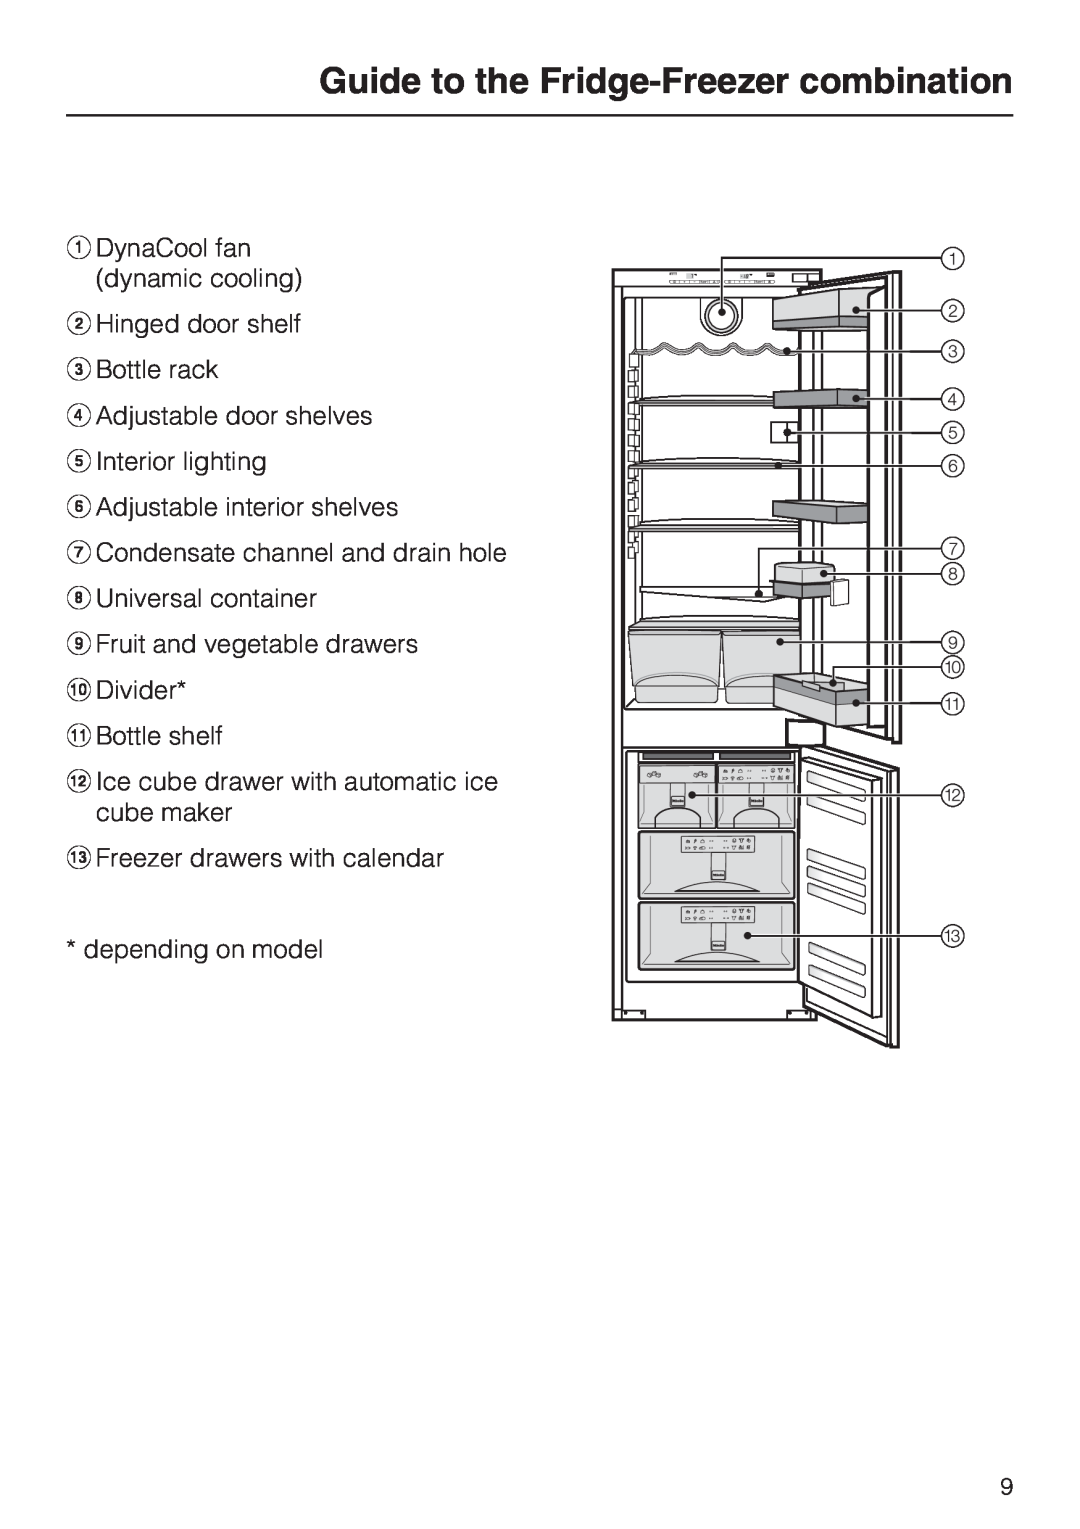 Miele KFN 9755 IDE Guide to the Fridge-Freezercombination, aDynaCool fan dynamic cooling bHinged door shelf 